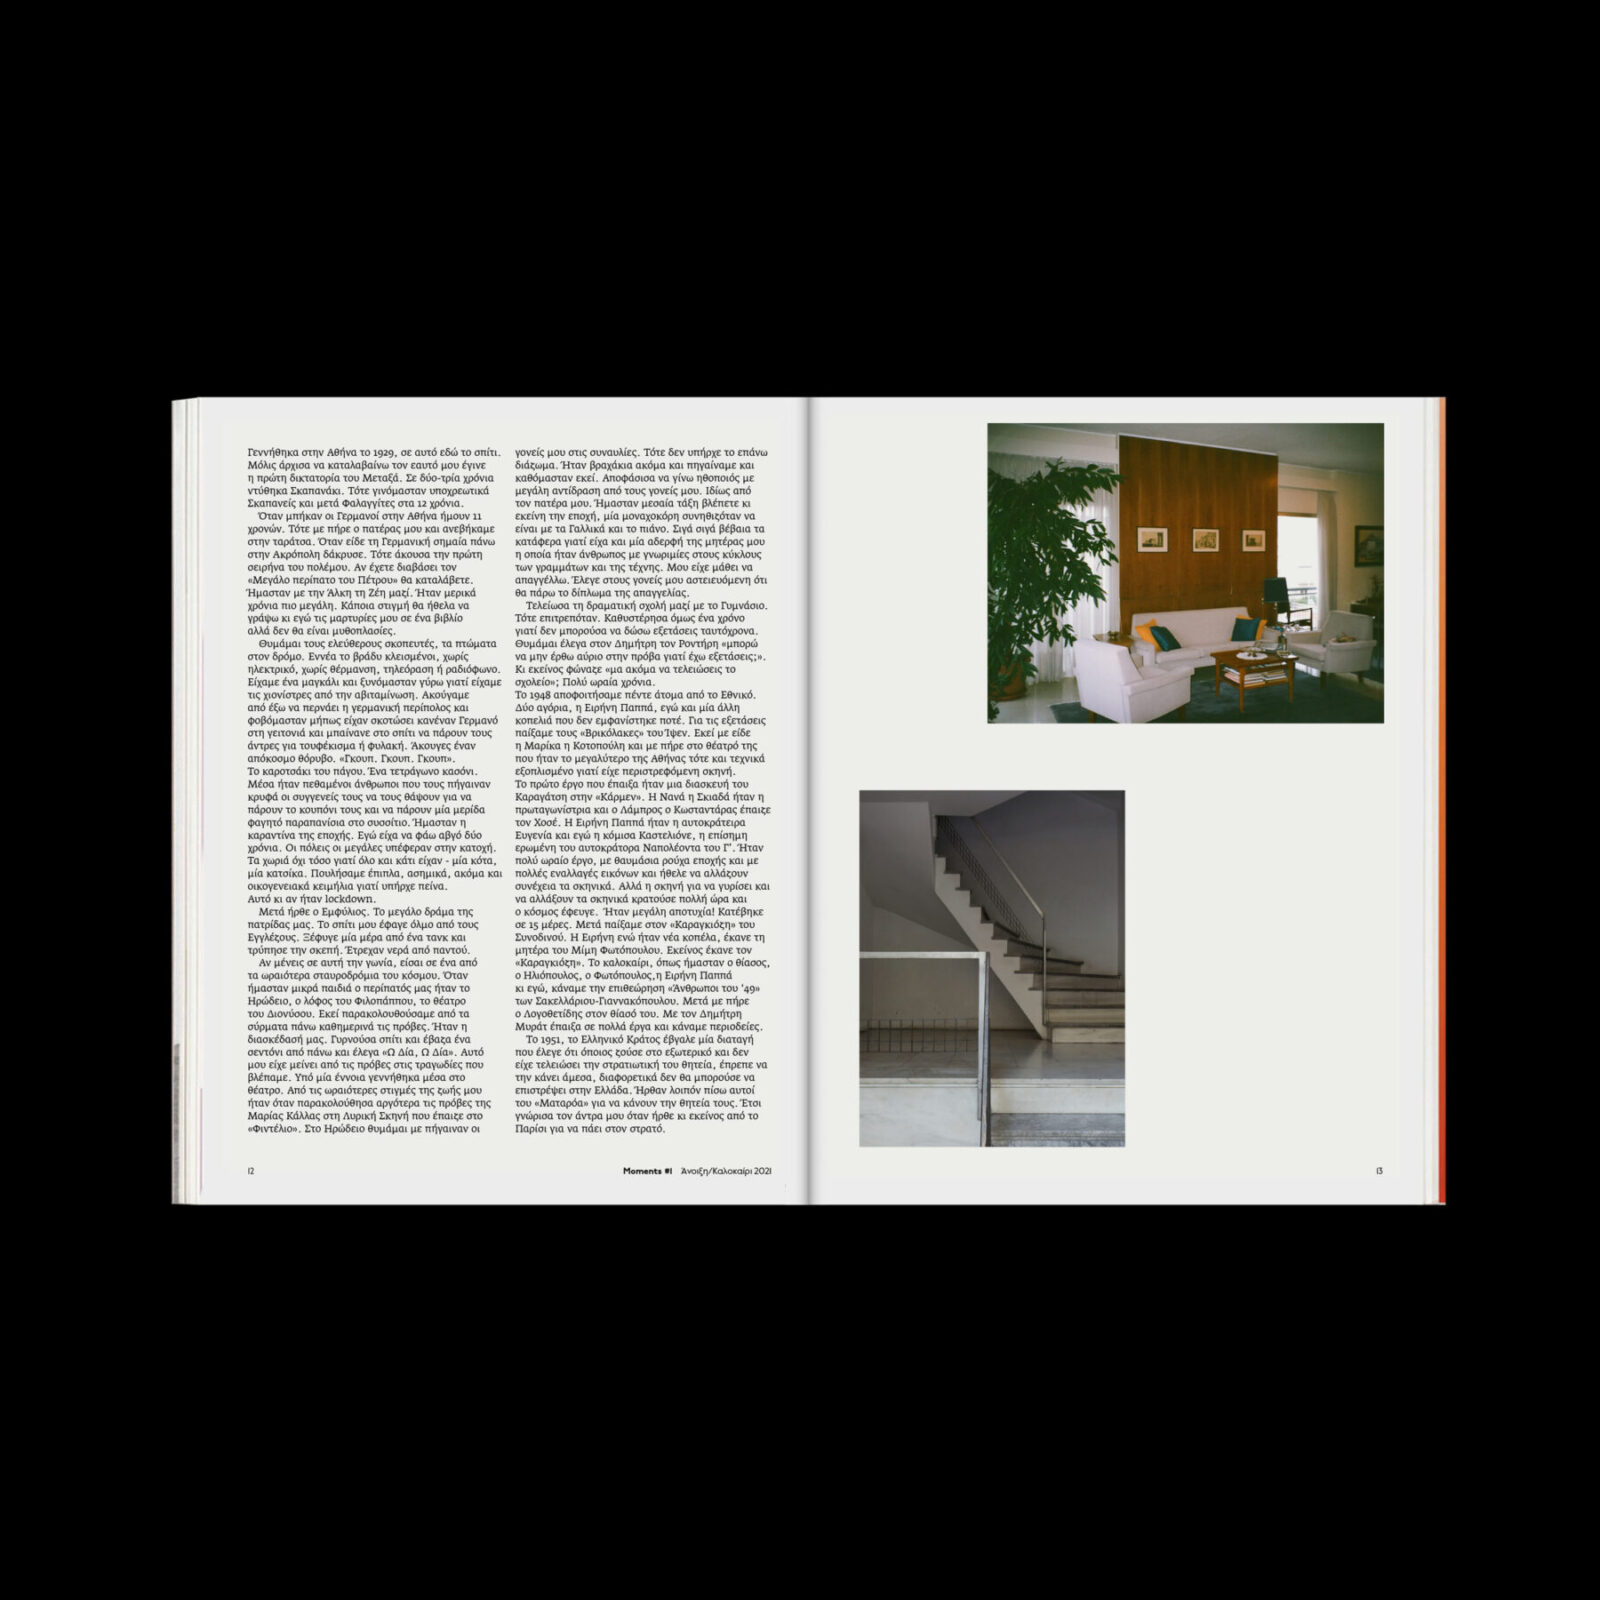 Archisearch Περιοδικό Moments. Στιγμές Αρχιτεκτονικού Πολιτισμού. Ένα ντοκιμαντέρ σε χαρτί.